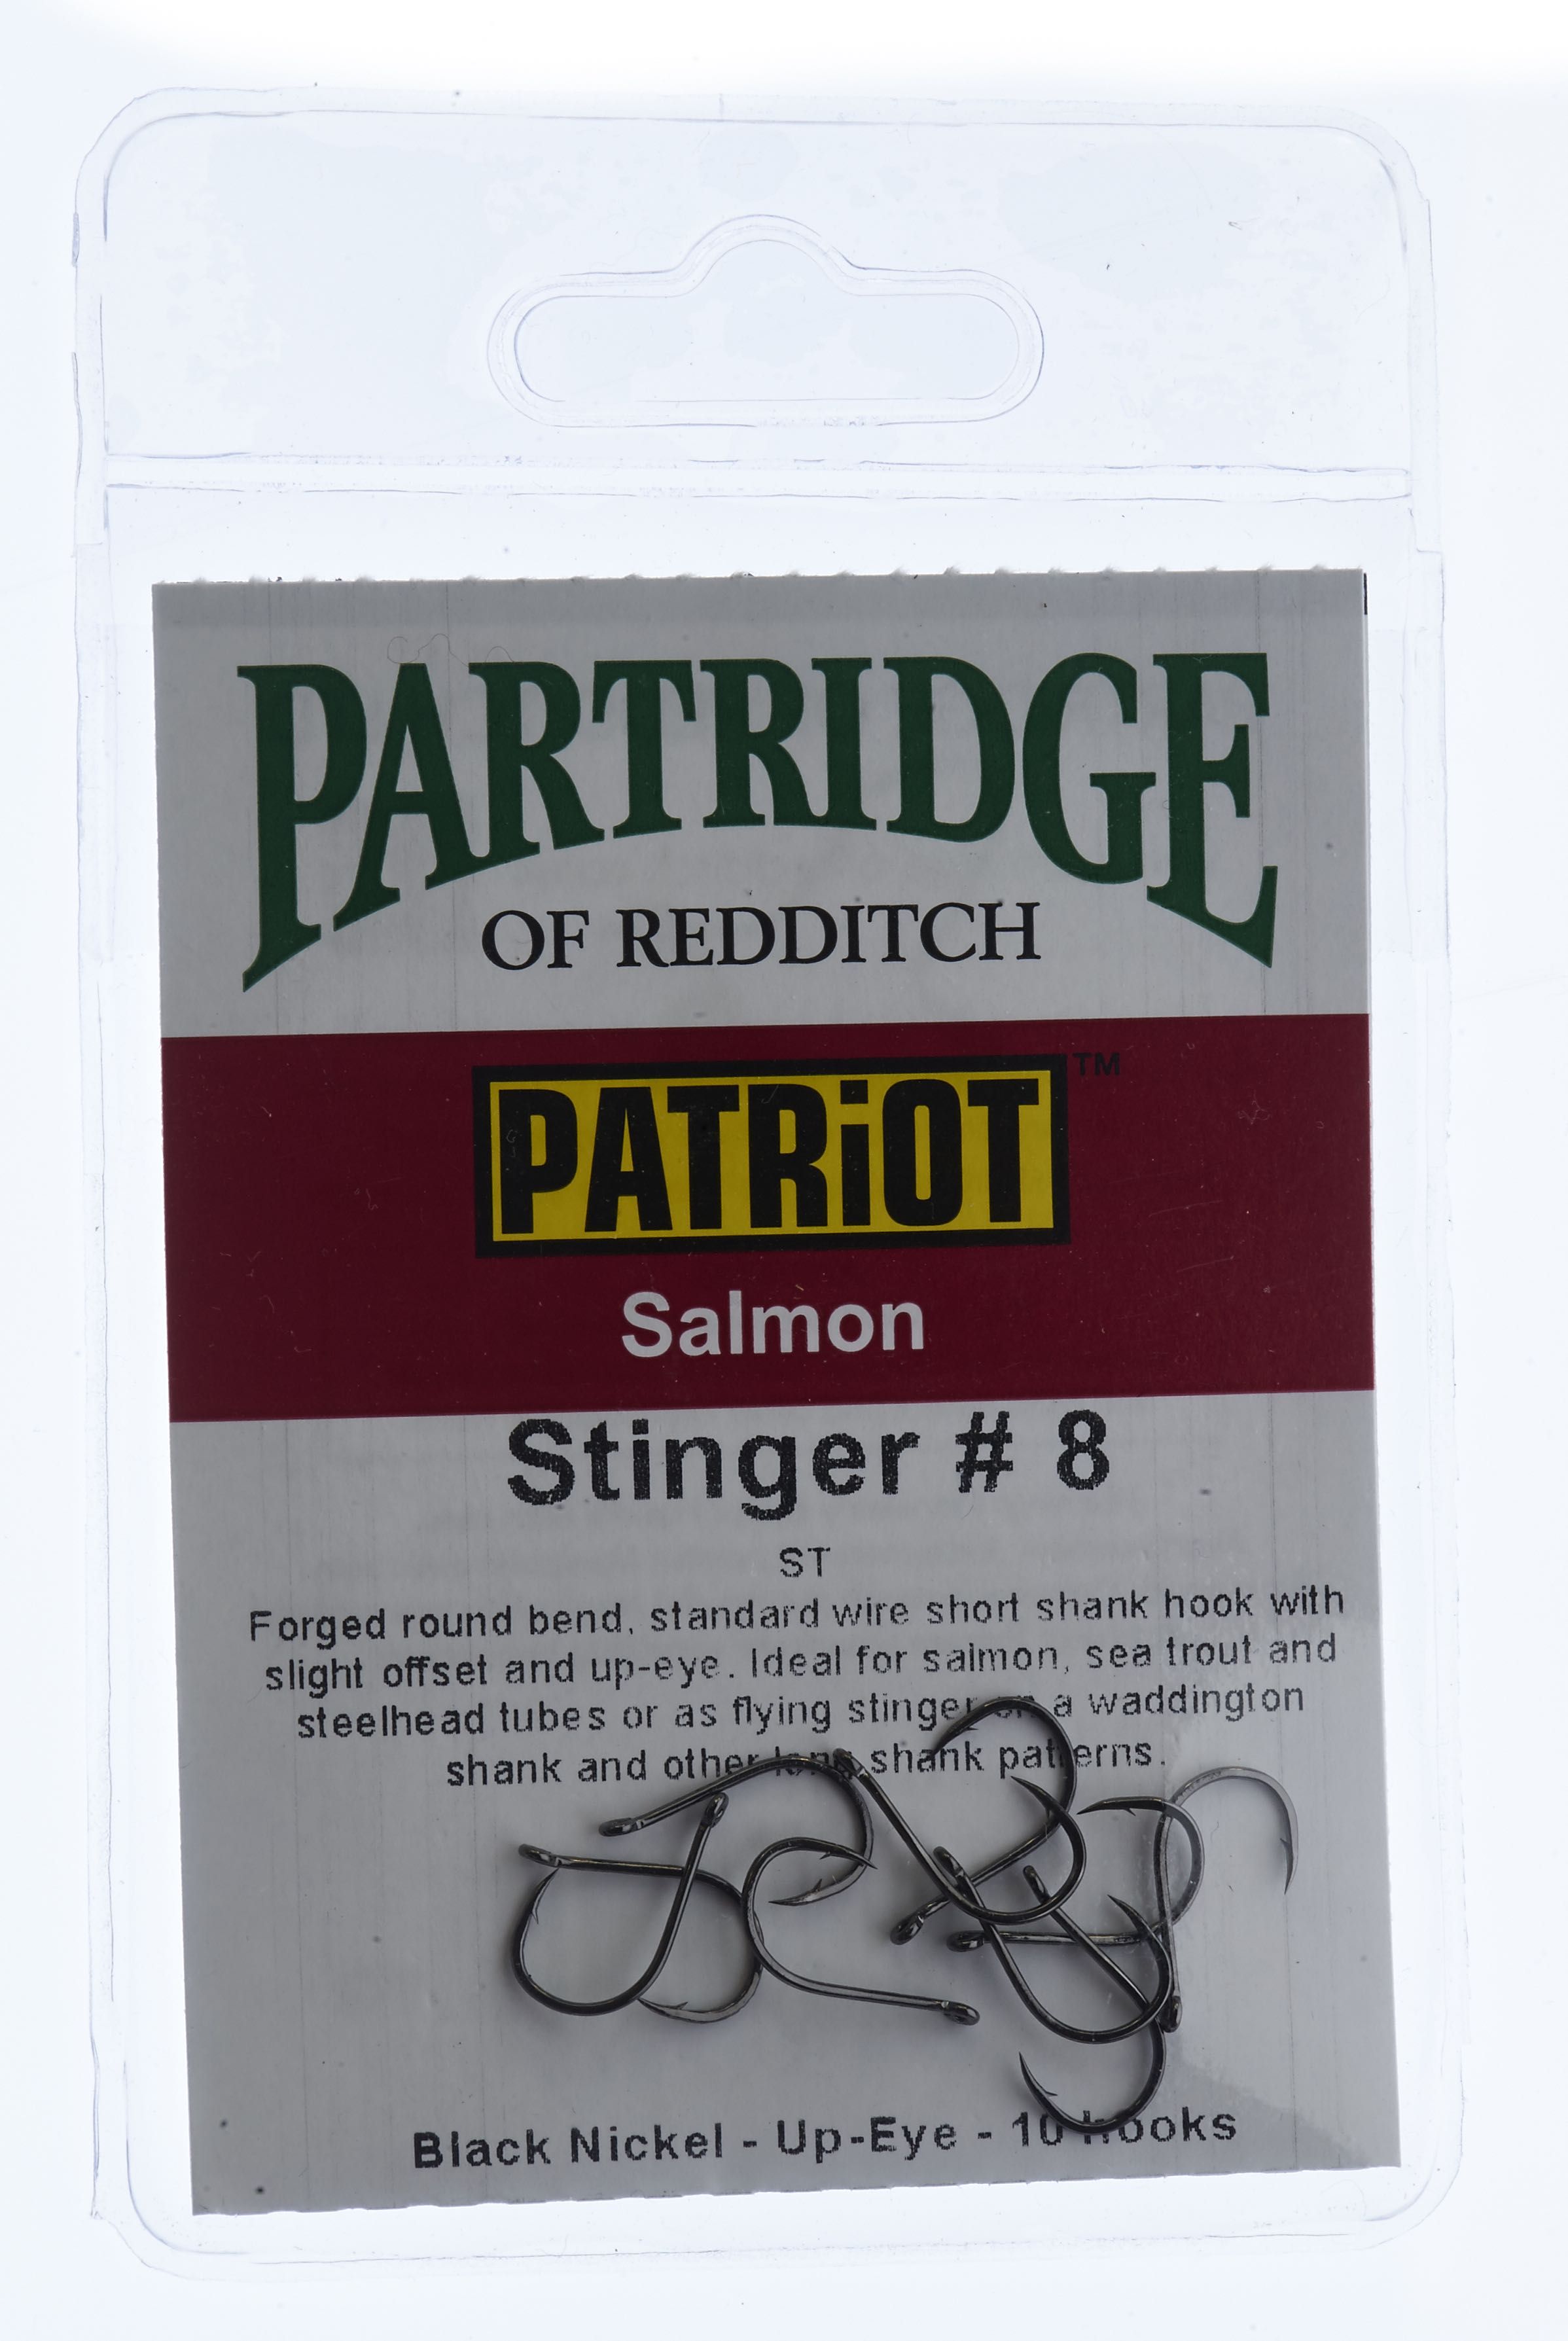 Partridge Patriot Stinger # 8 Tube fly hook